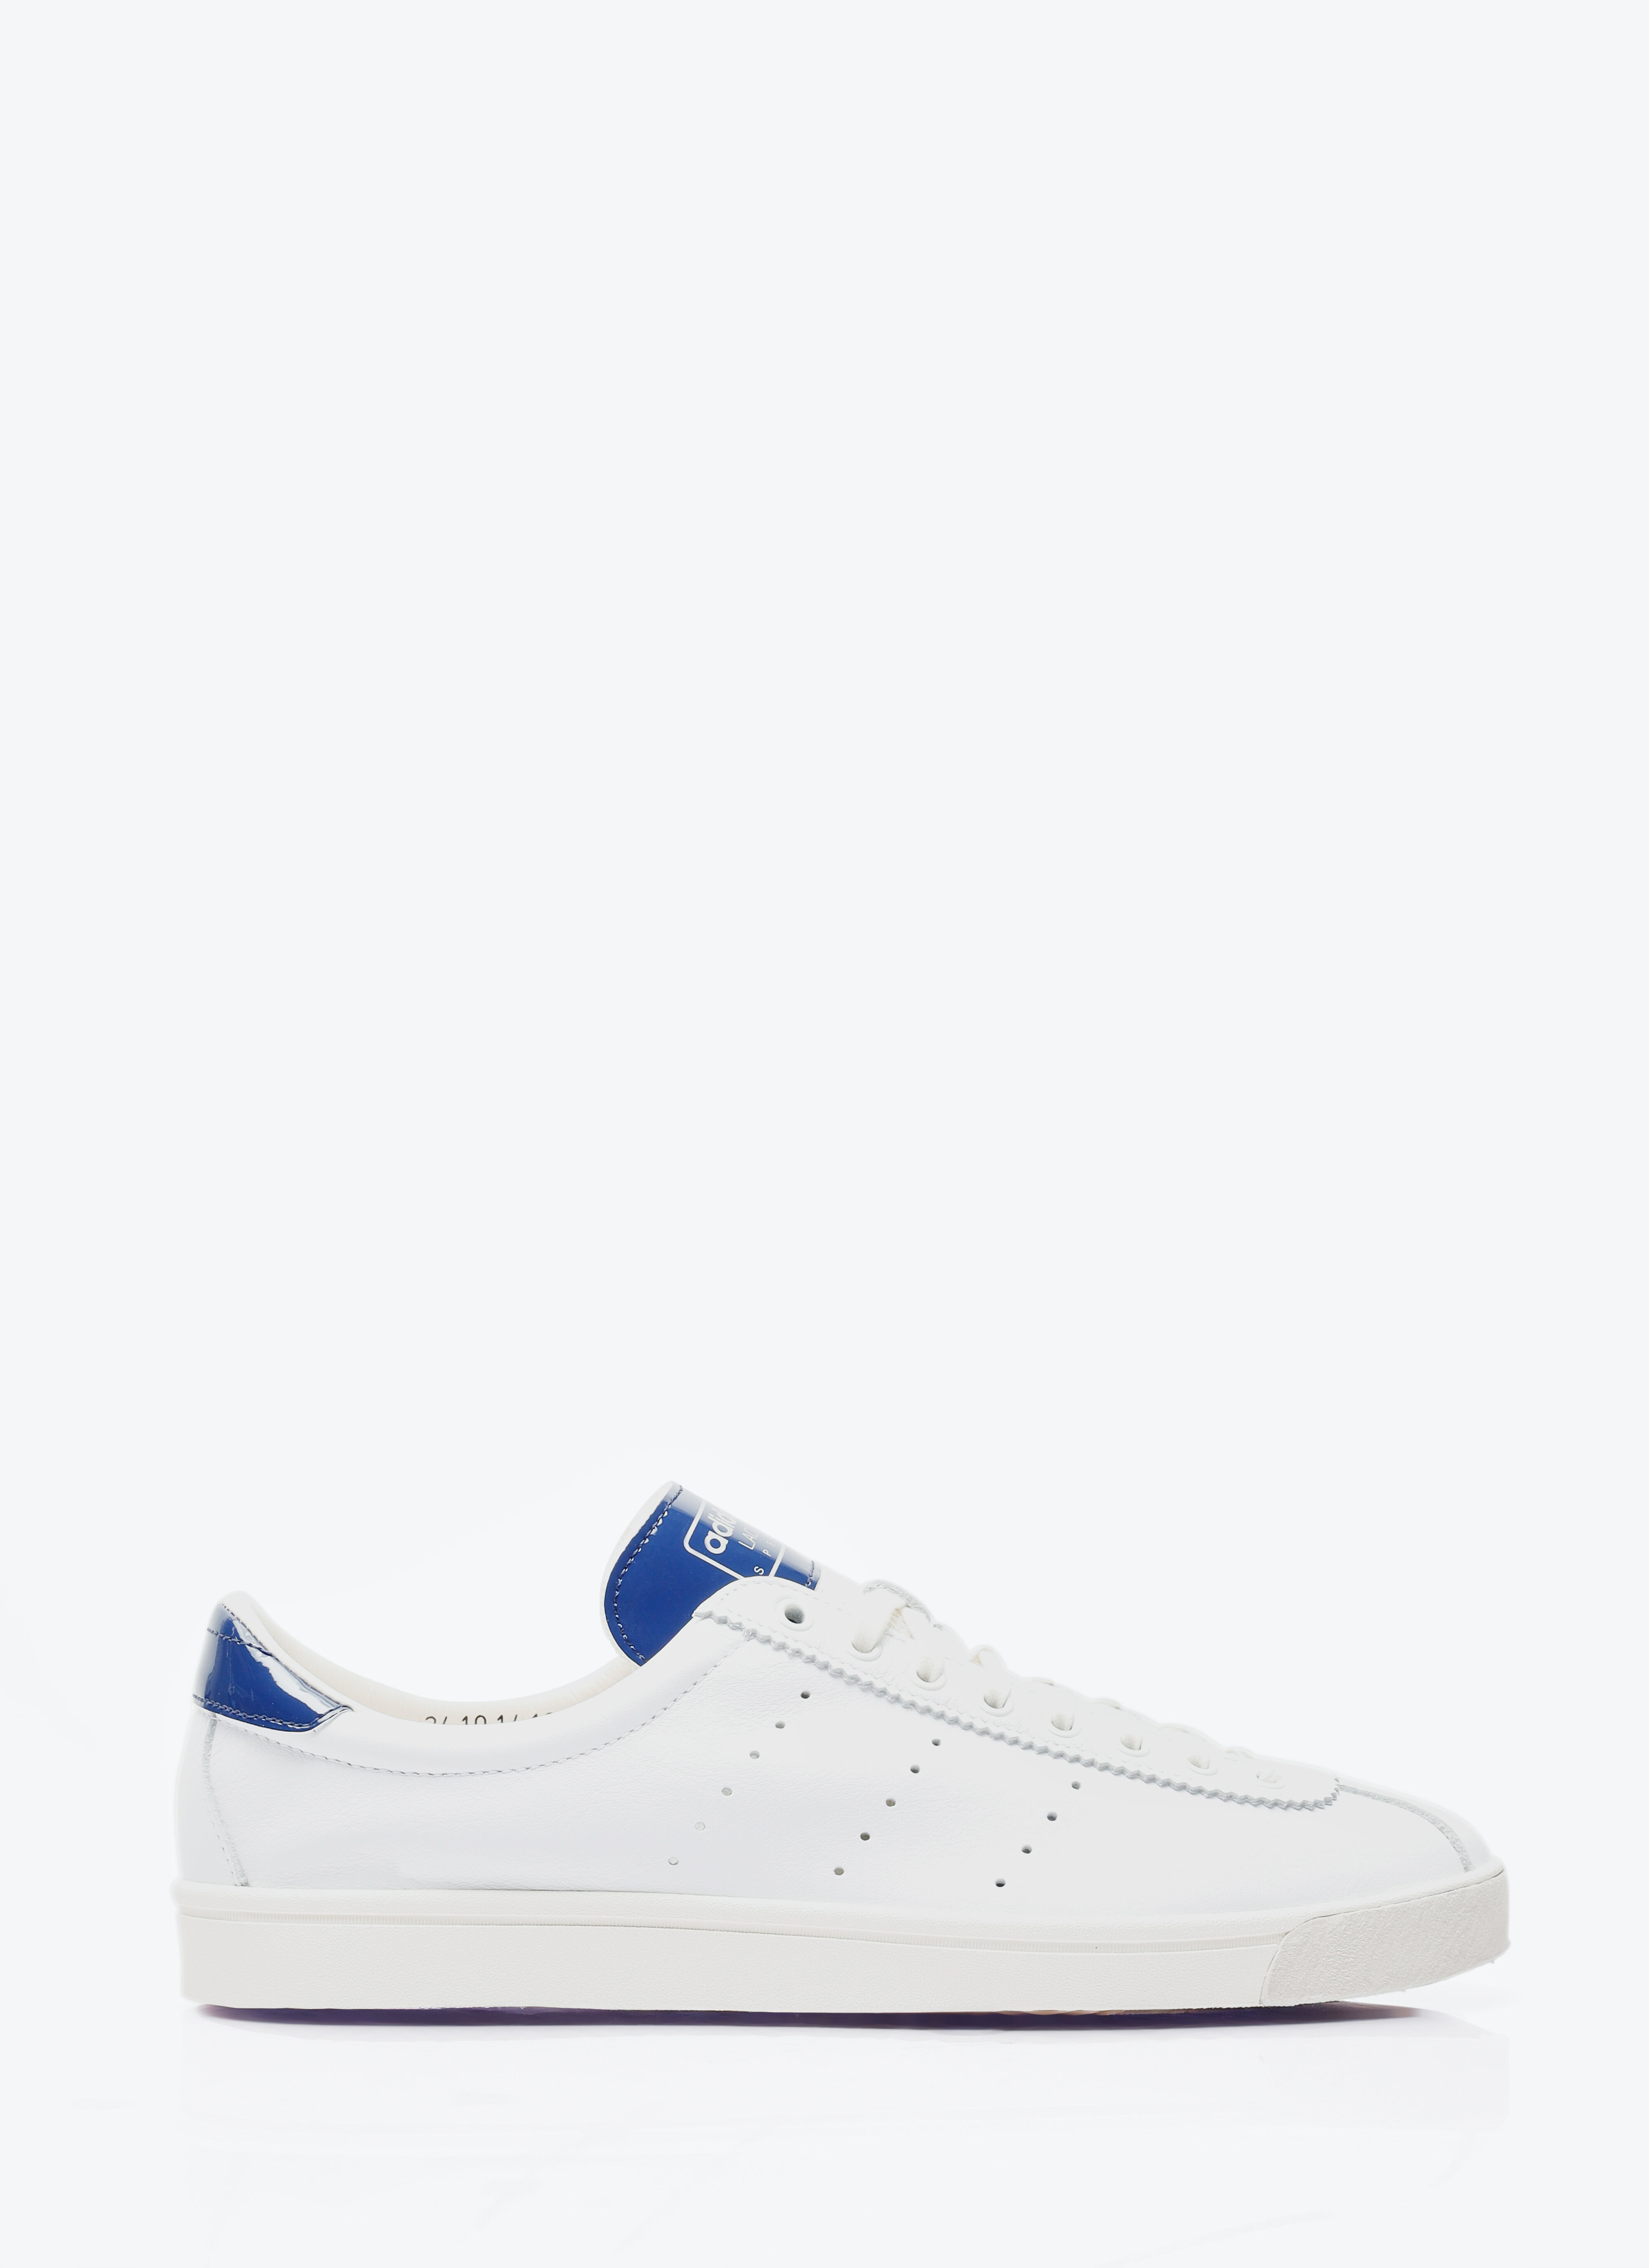 adidas SPZL Lacombe Spzl Sneakers White aos0157024